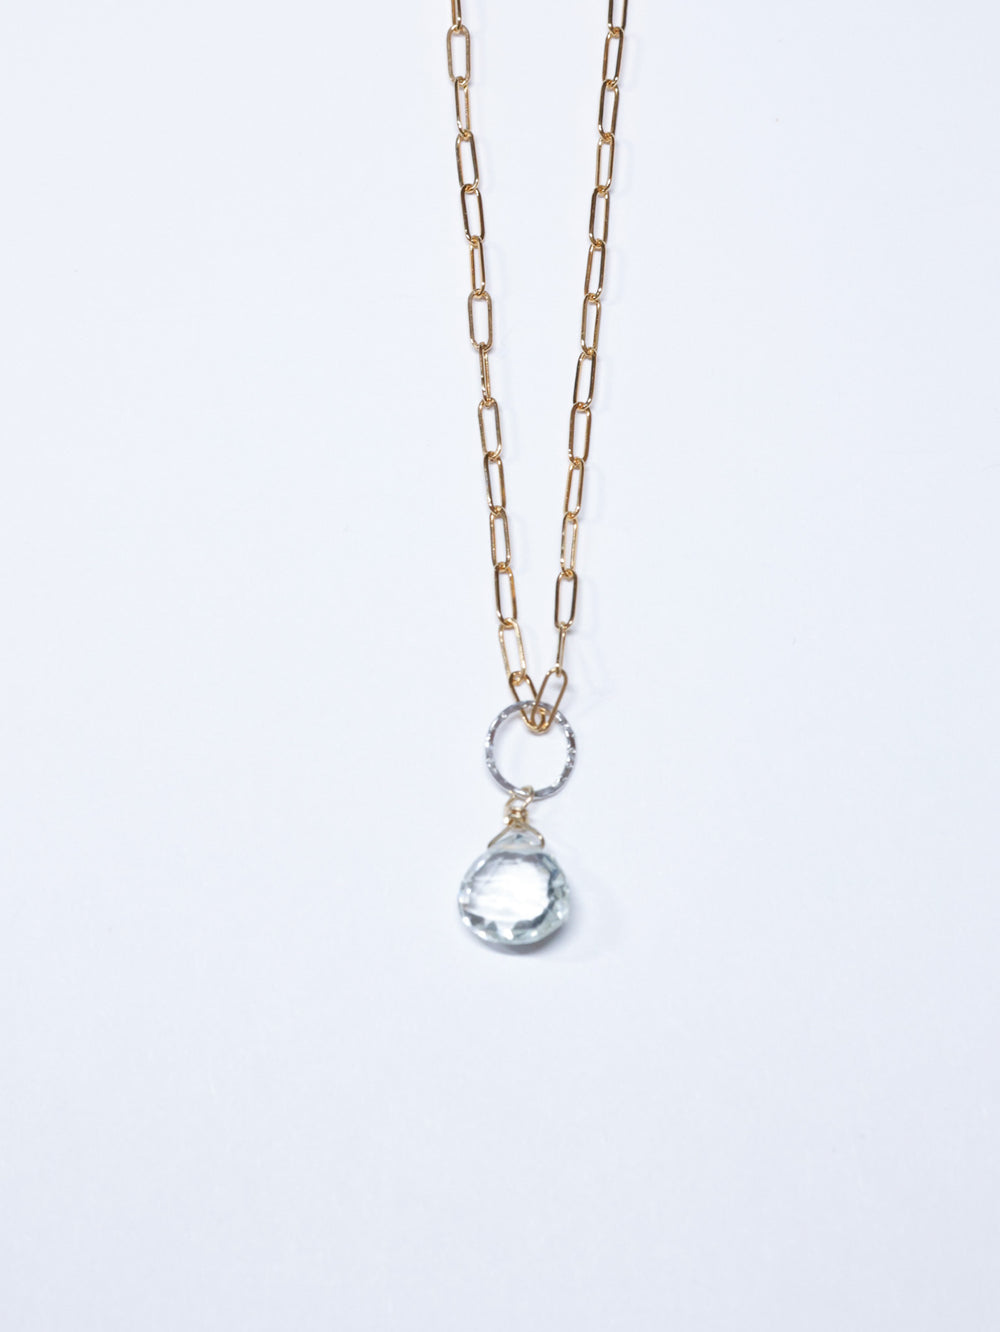 Pale Aquamarine pendant necklace -gold filled